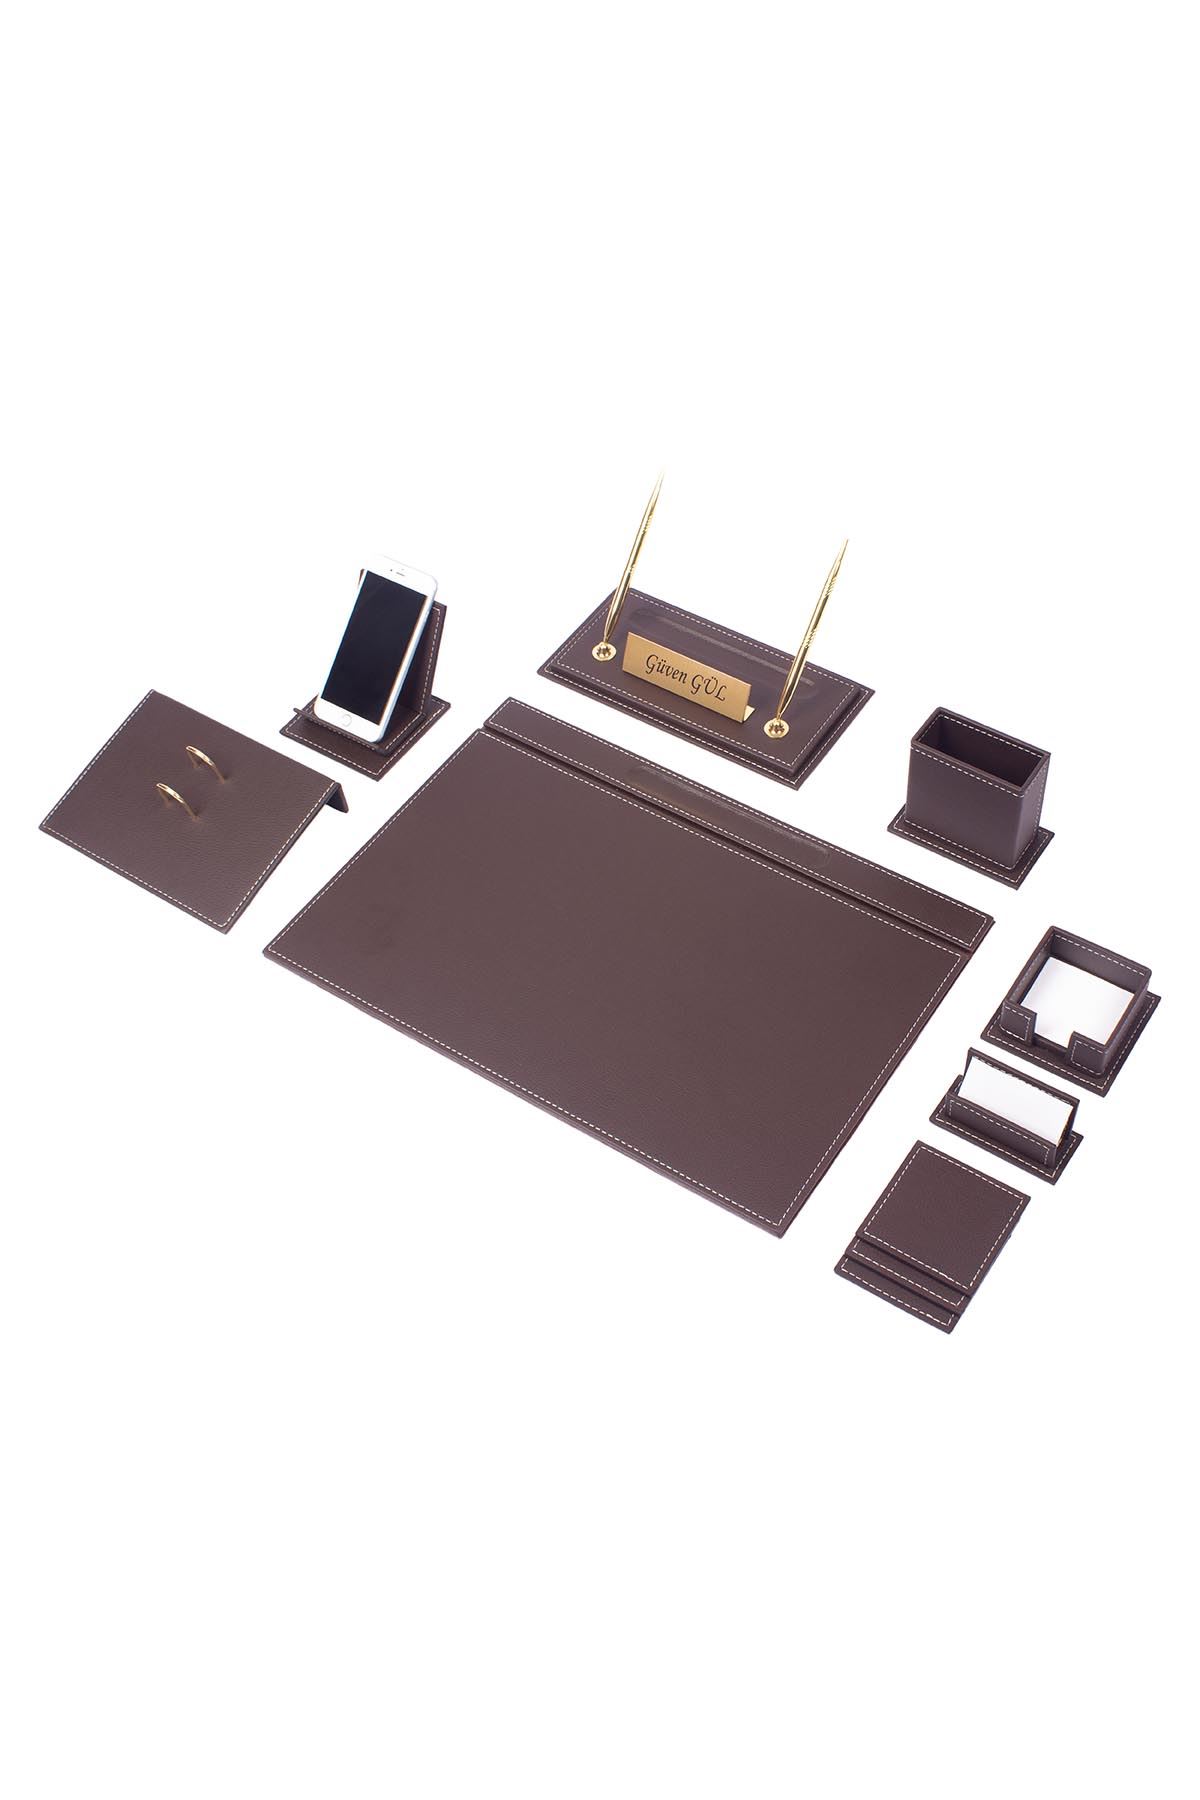 Vega Leather Desk Set Brown 12 Accessories